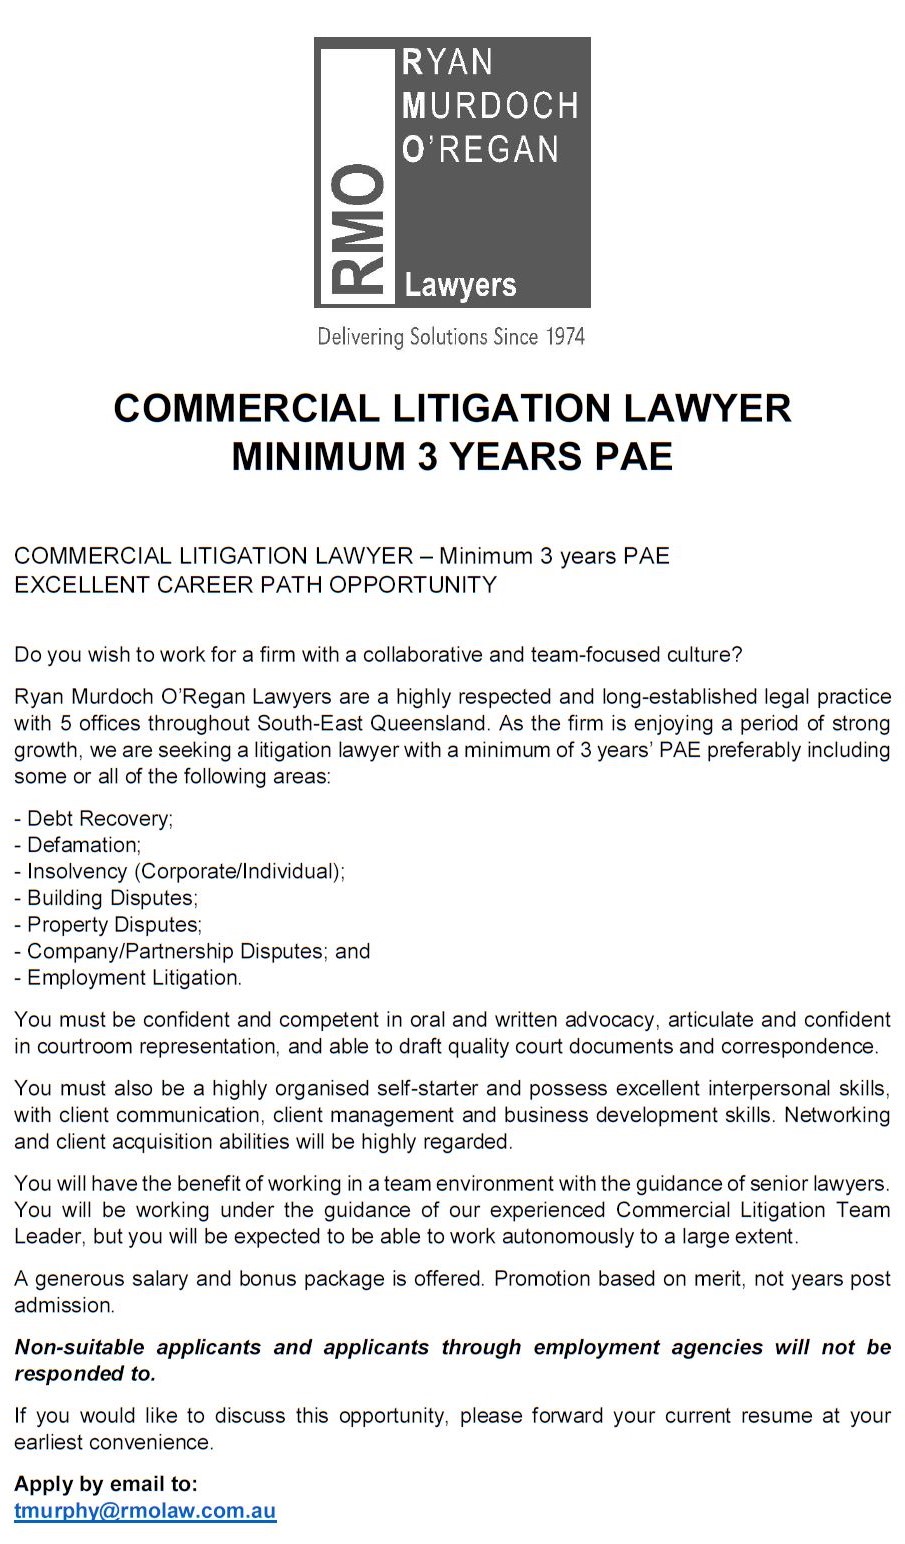 https://rmolaw.com.au/wp-content/uploads/2022/04/Commercial-Litigation-Lawyer-Minimum-3-Years-PAE.jpg